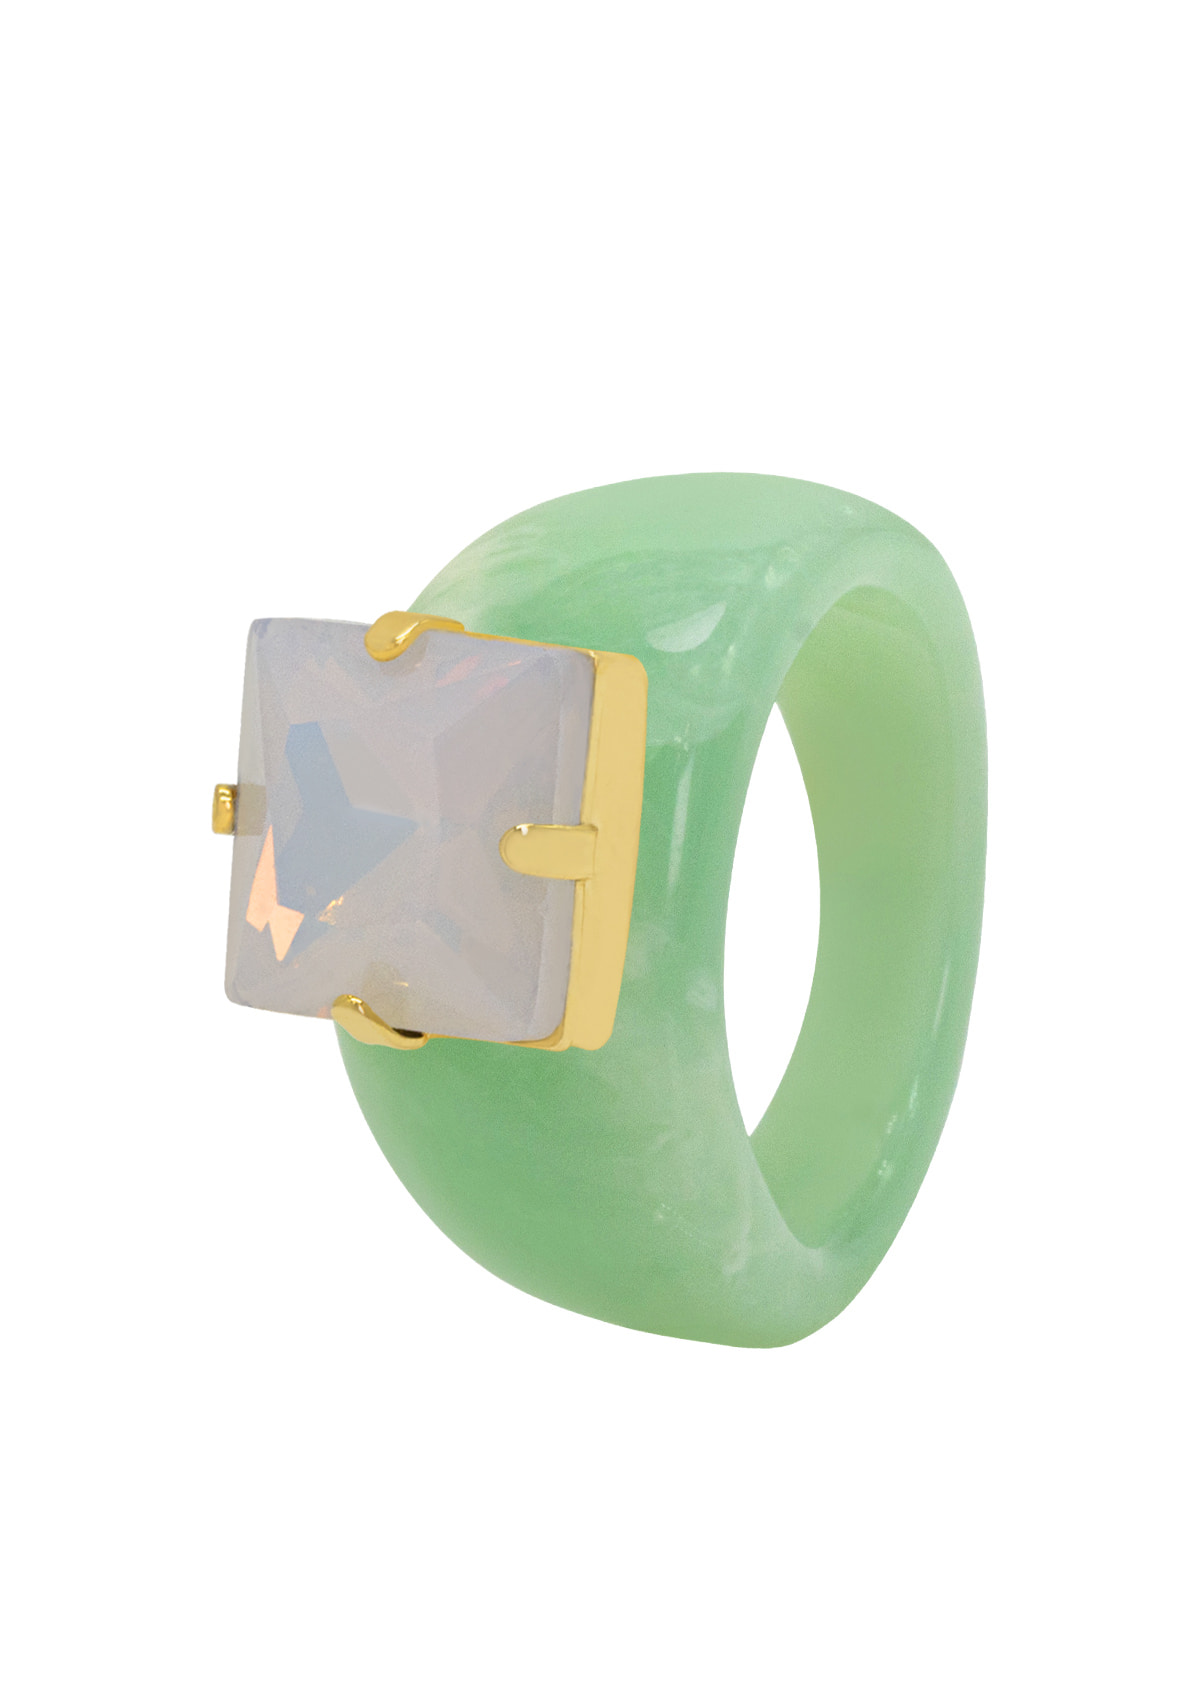 Square Emerald Ring